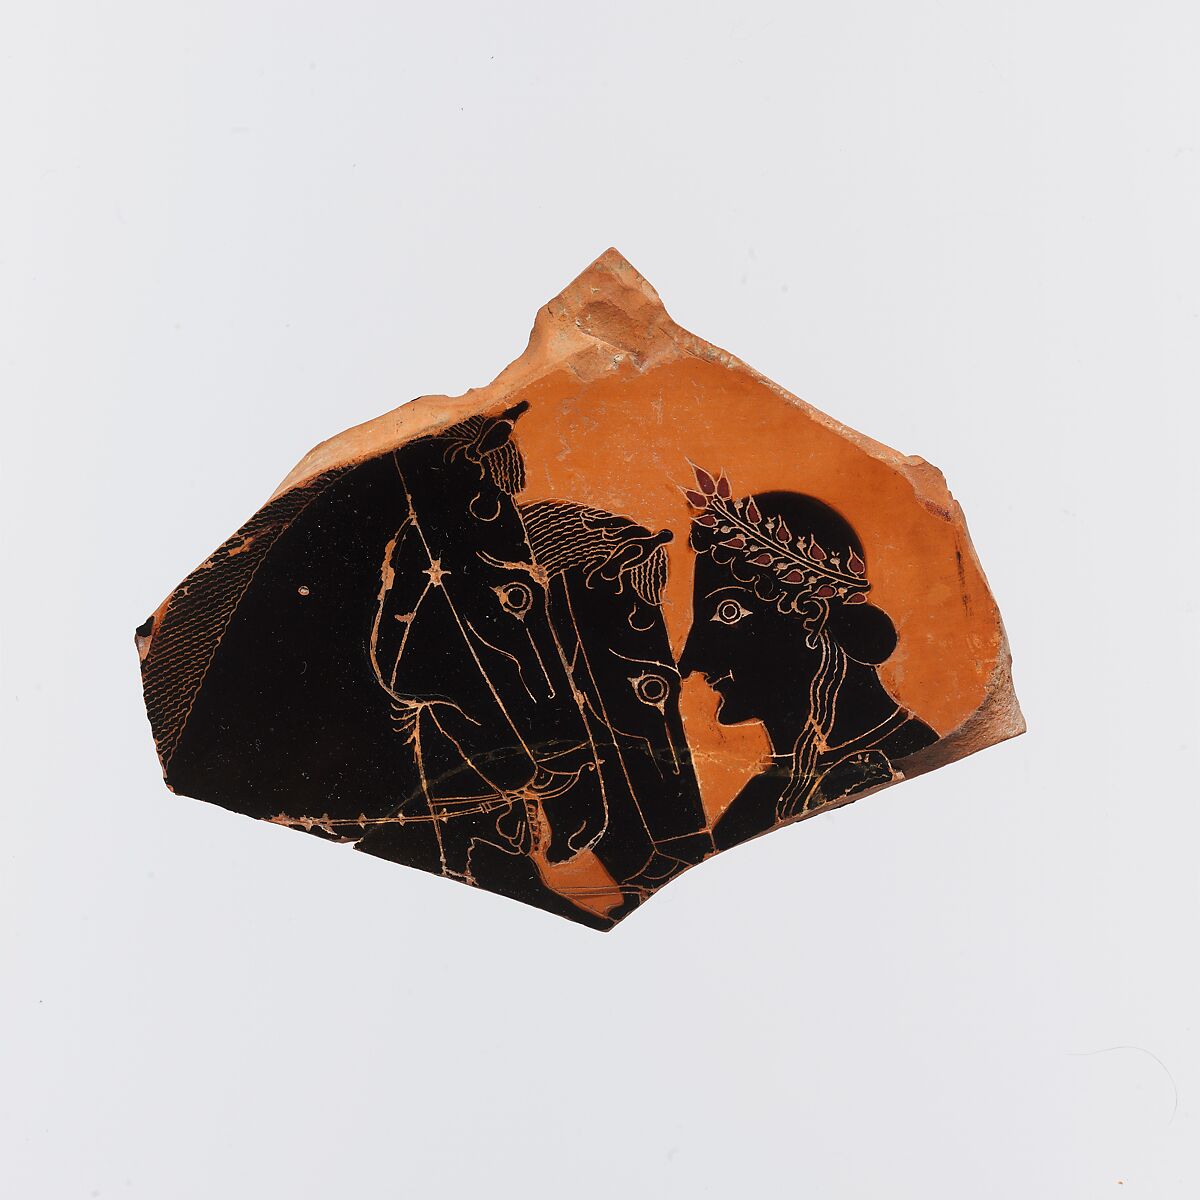 Fragment of a terracotta amphora (jar)